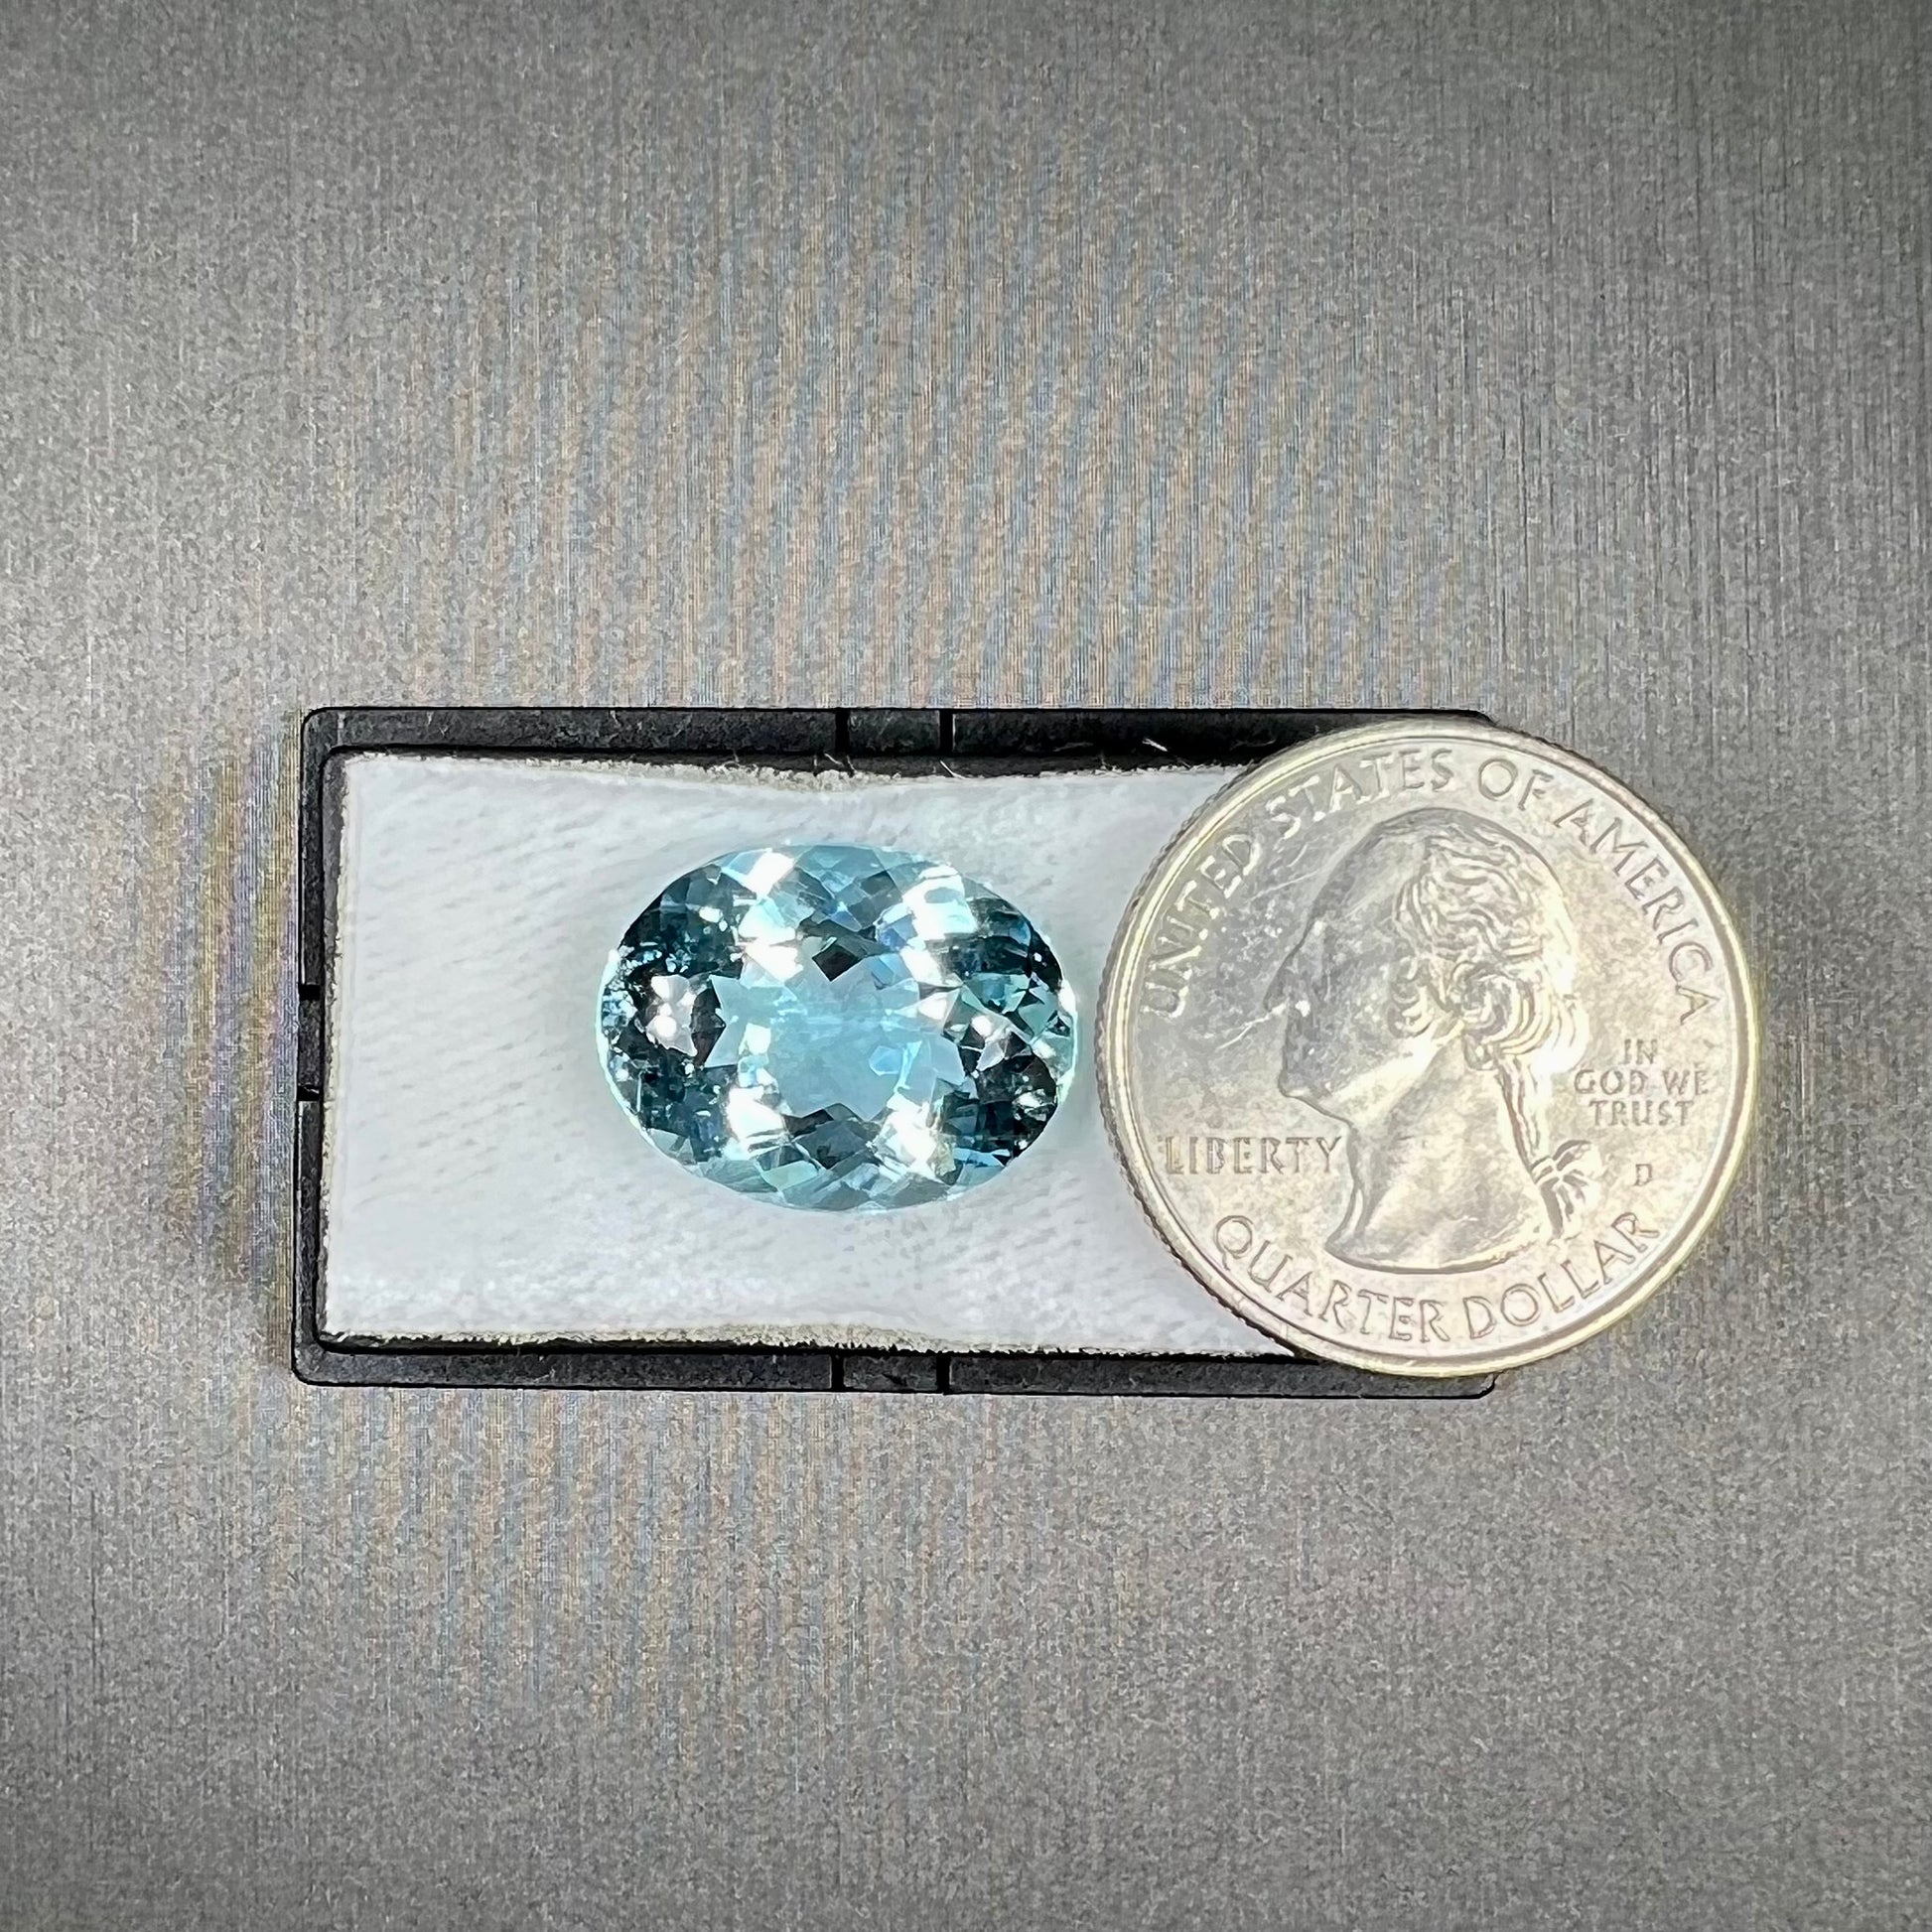 A loose, AAA grade, oval cut aquamarine stone from Brazil.